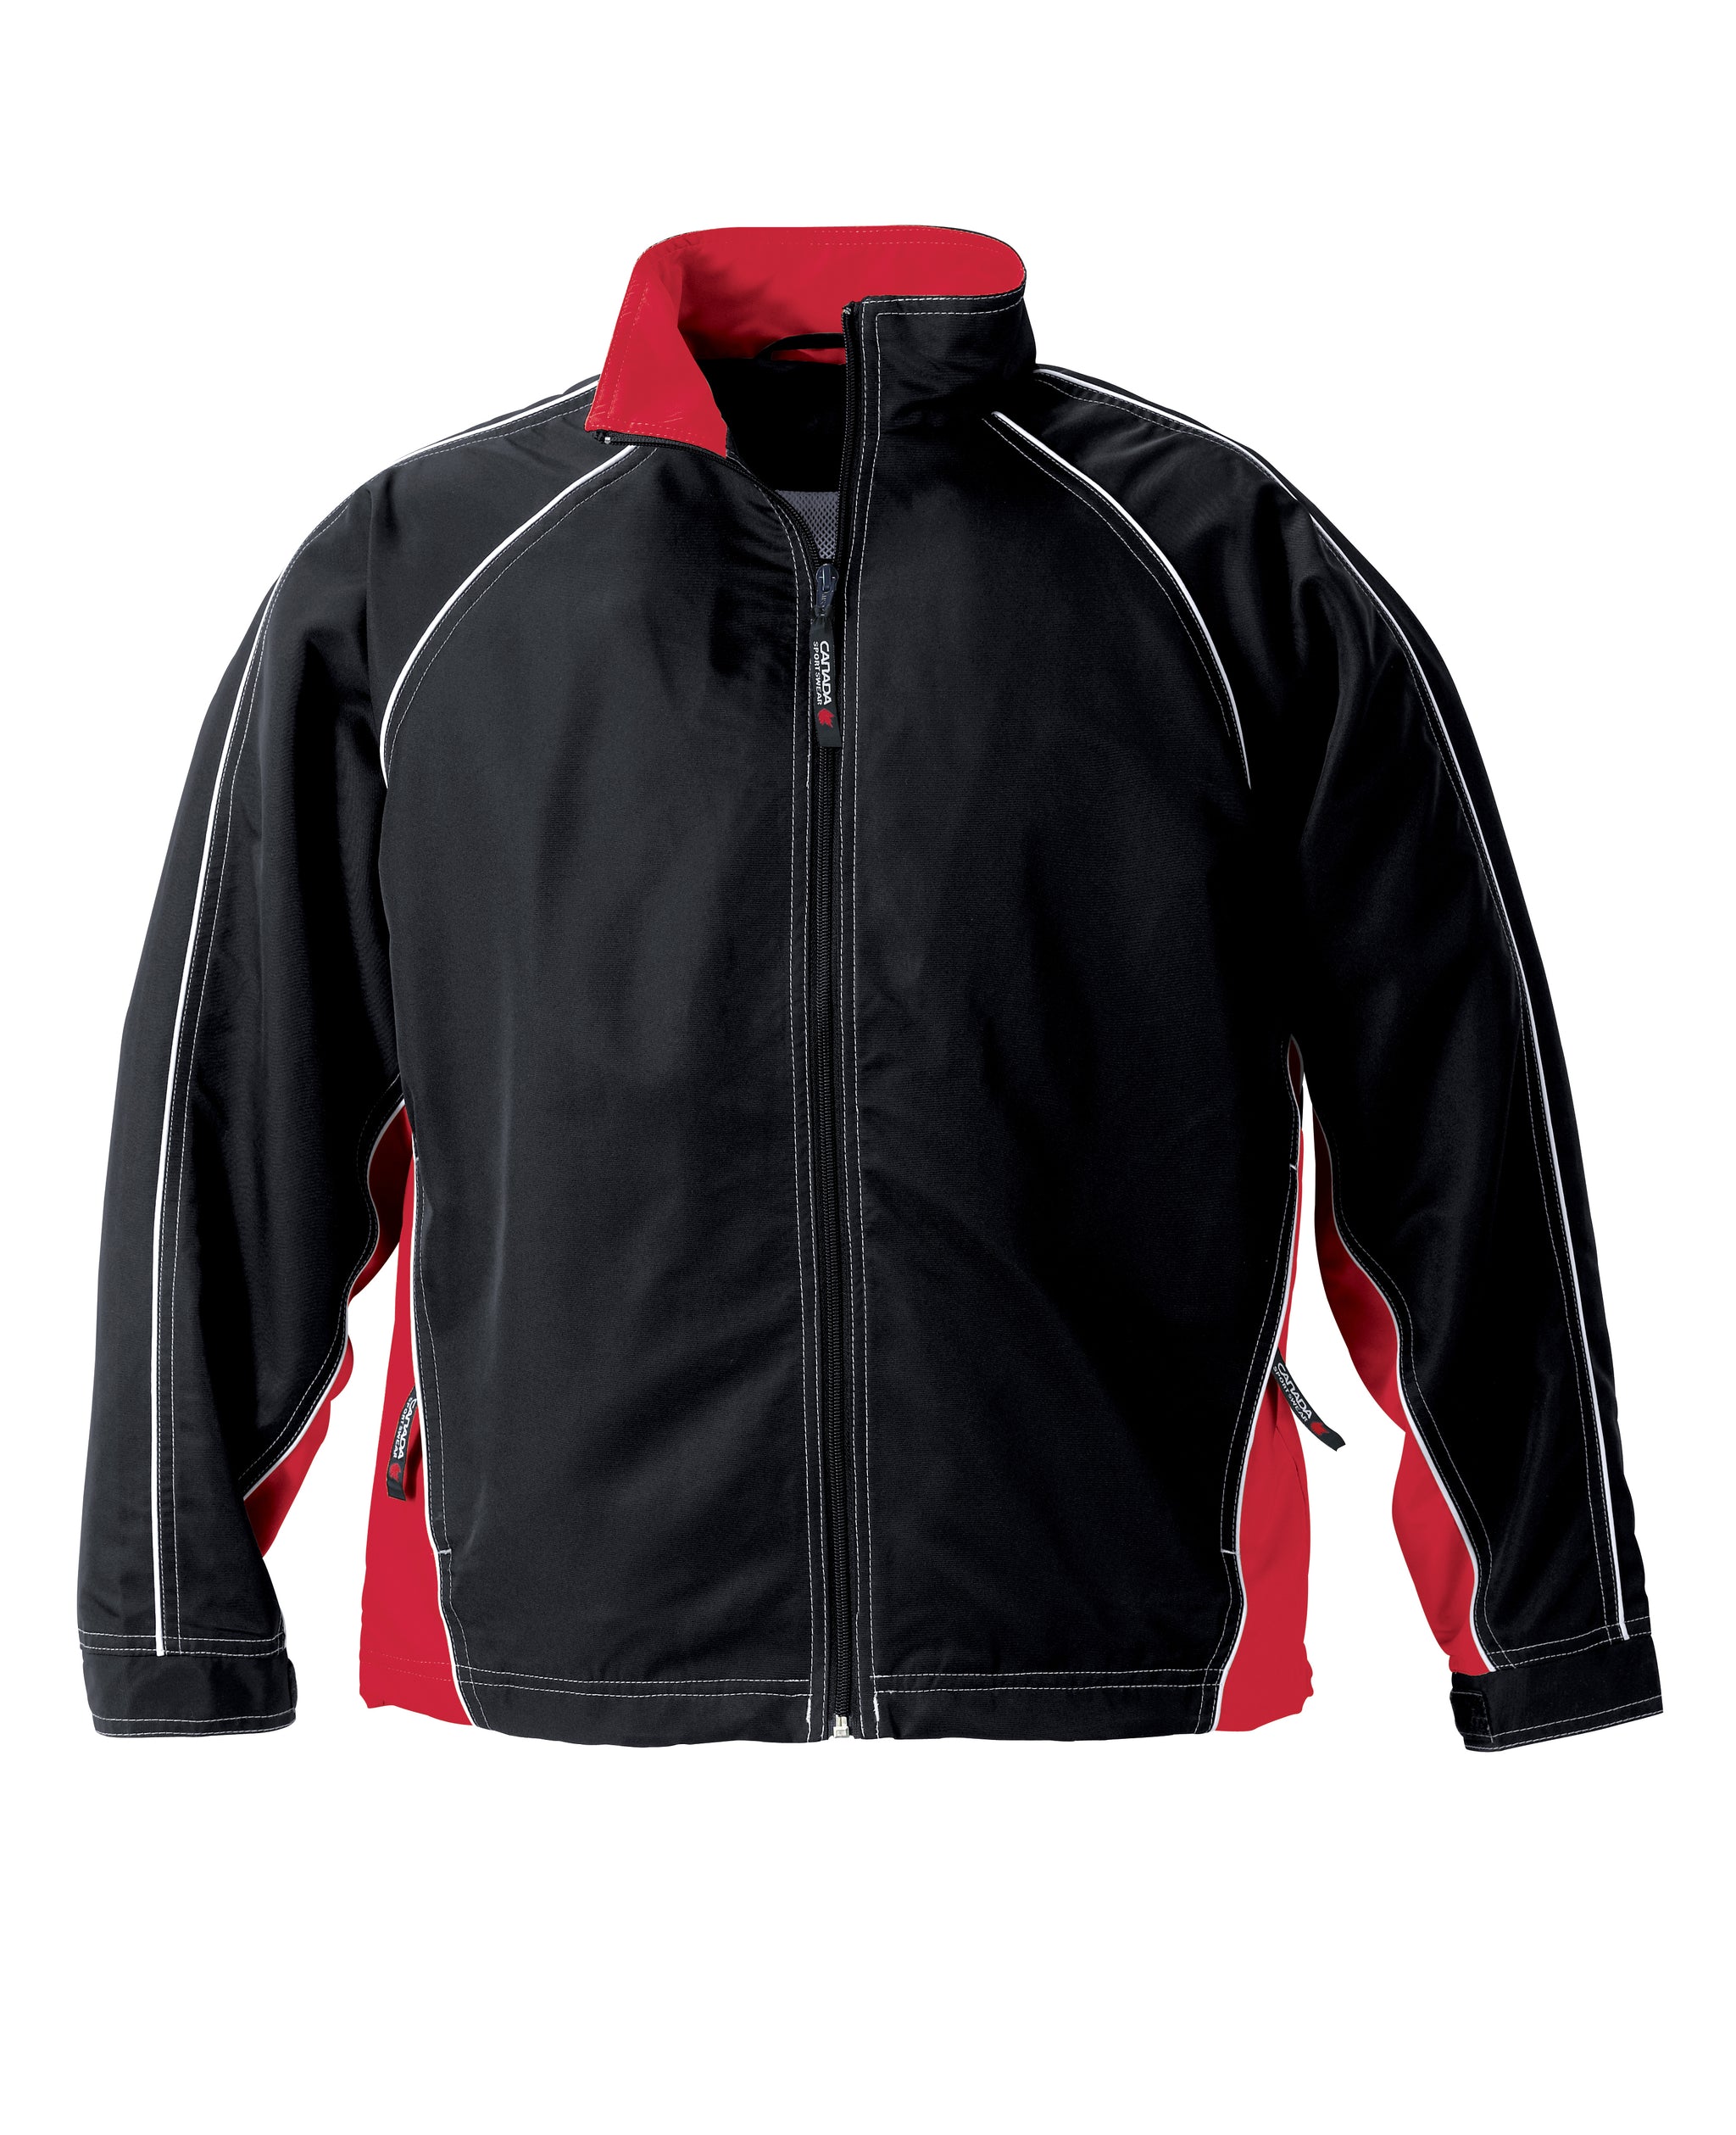 Black/Red Lightweight Jacket - Inventory